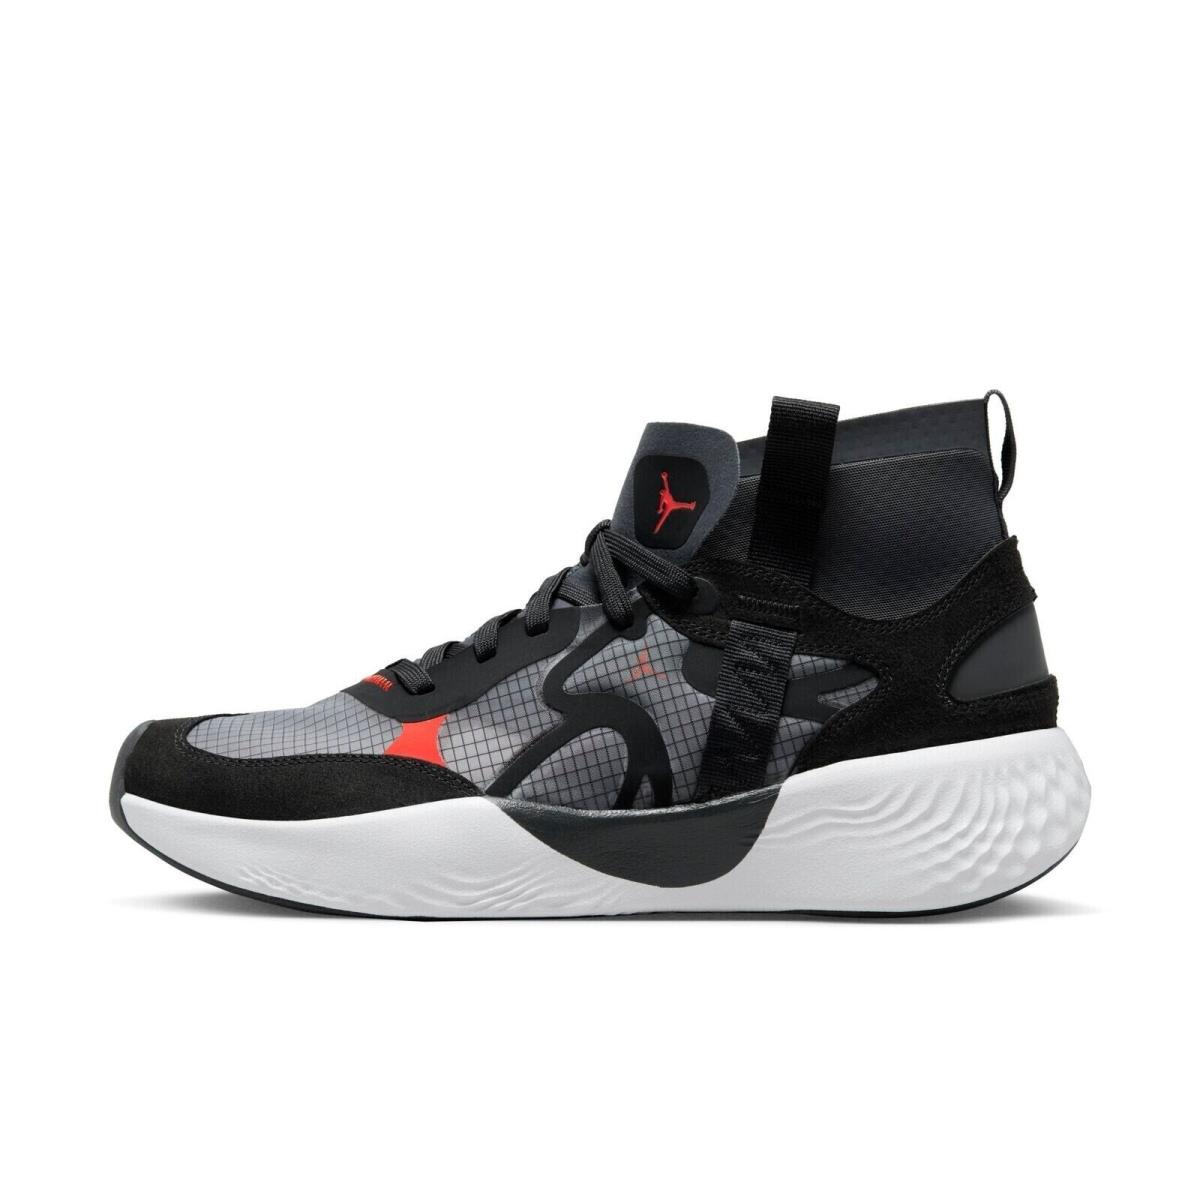 Nike Jordan Delta 3 Mid Men`s Basketball Shoe DR7614 060 Size 10.5 US - Black/Chile Red-Anthracite